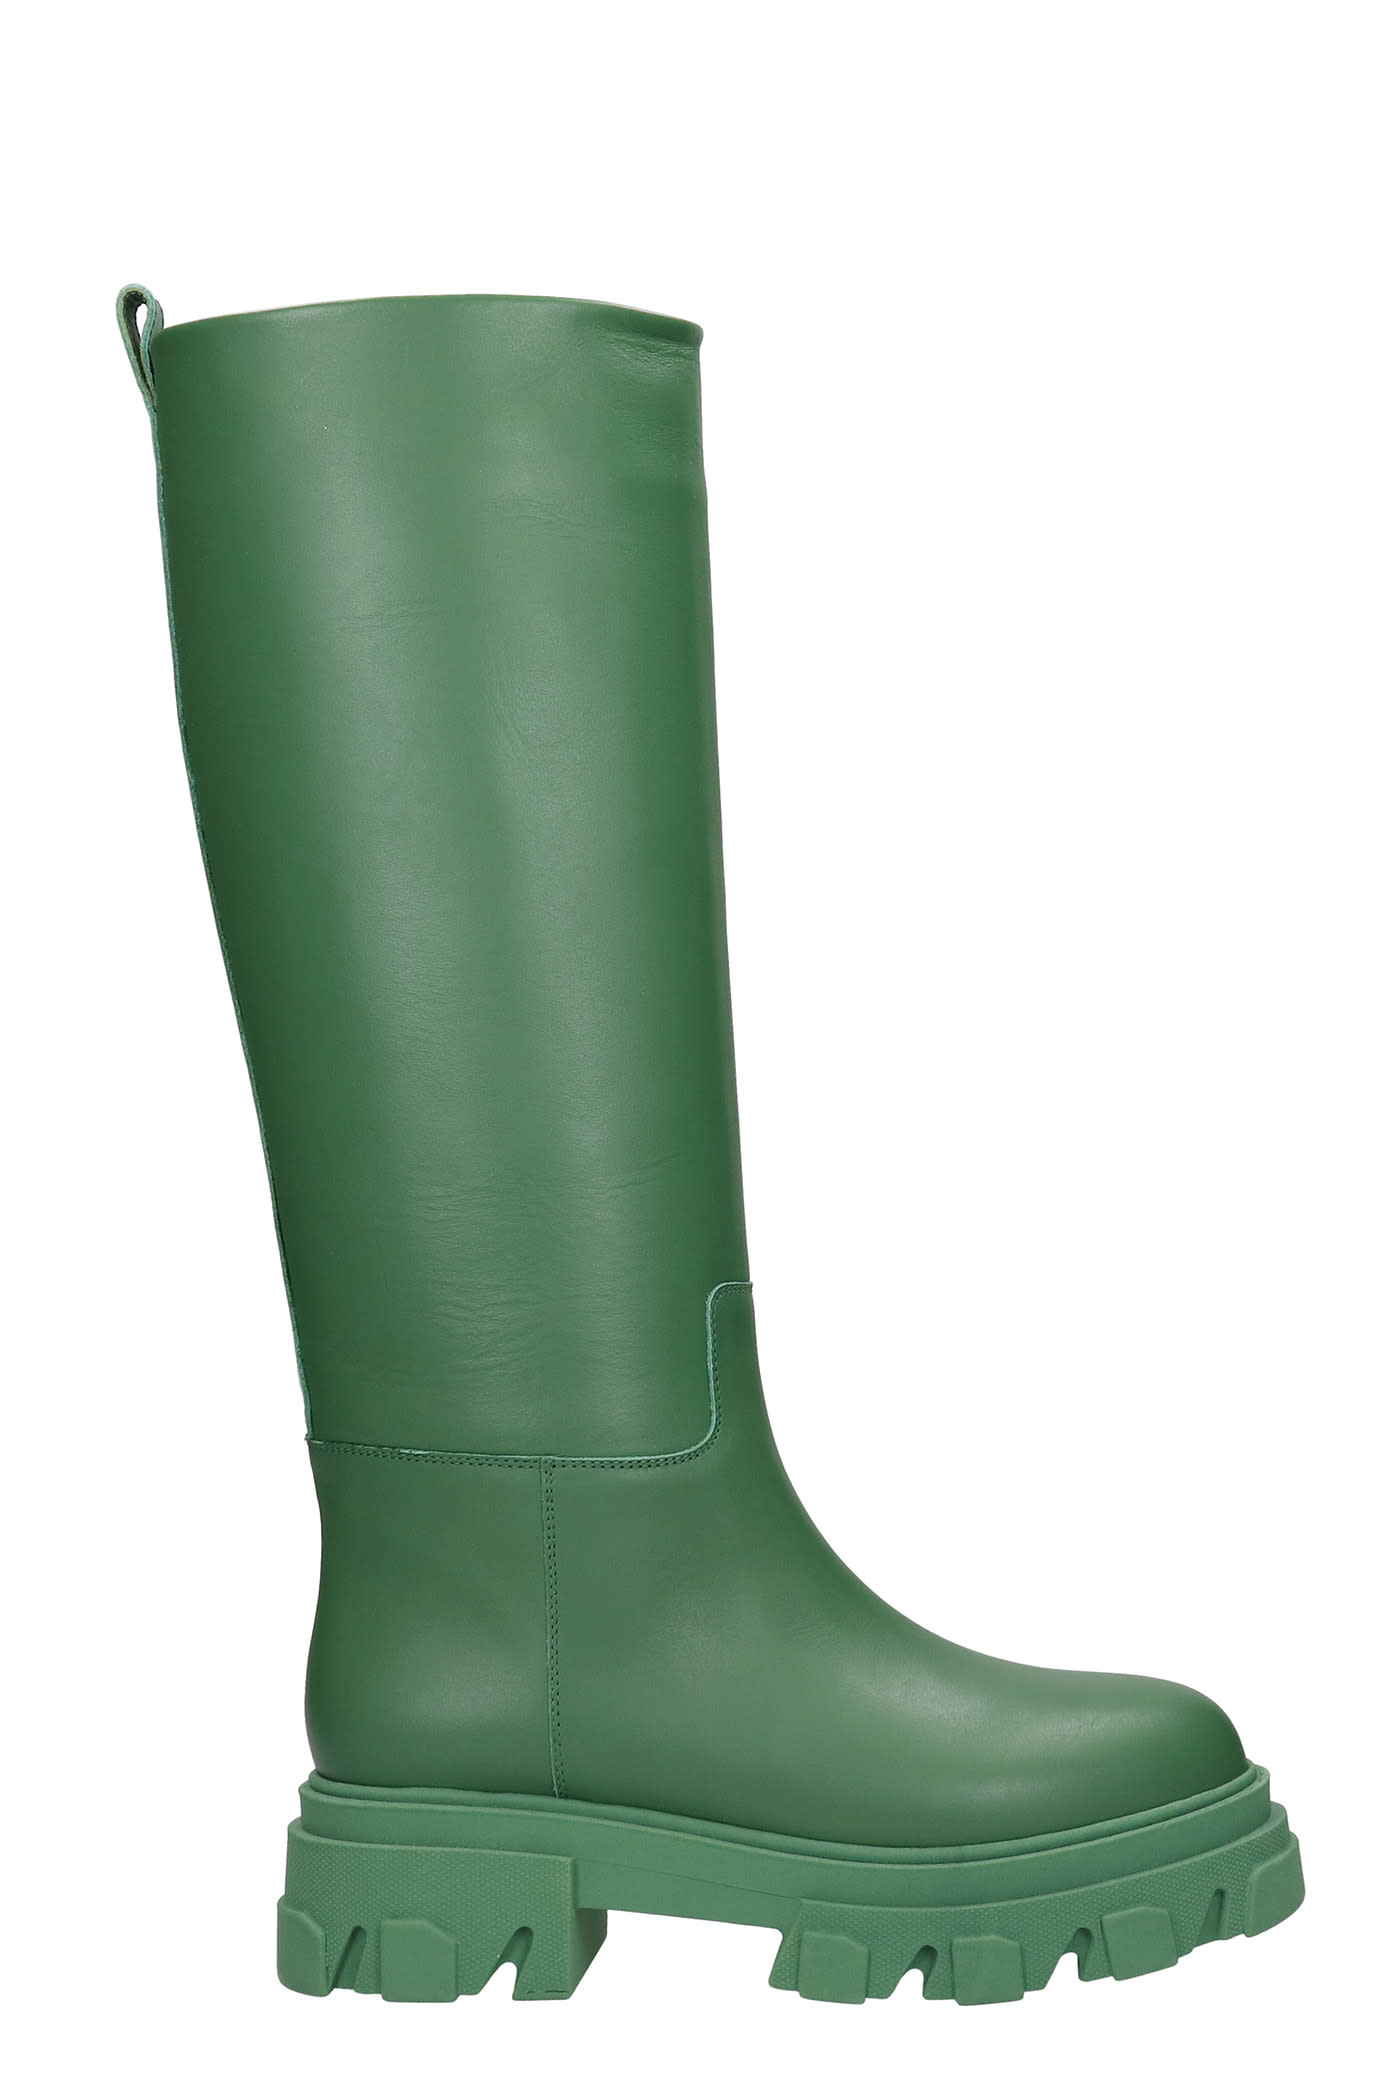 Gia X Pernille Teisbaek Perni 07 Low Heels Boots In Green Leather